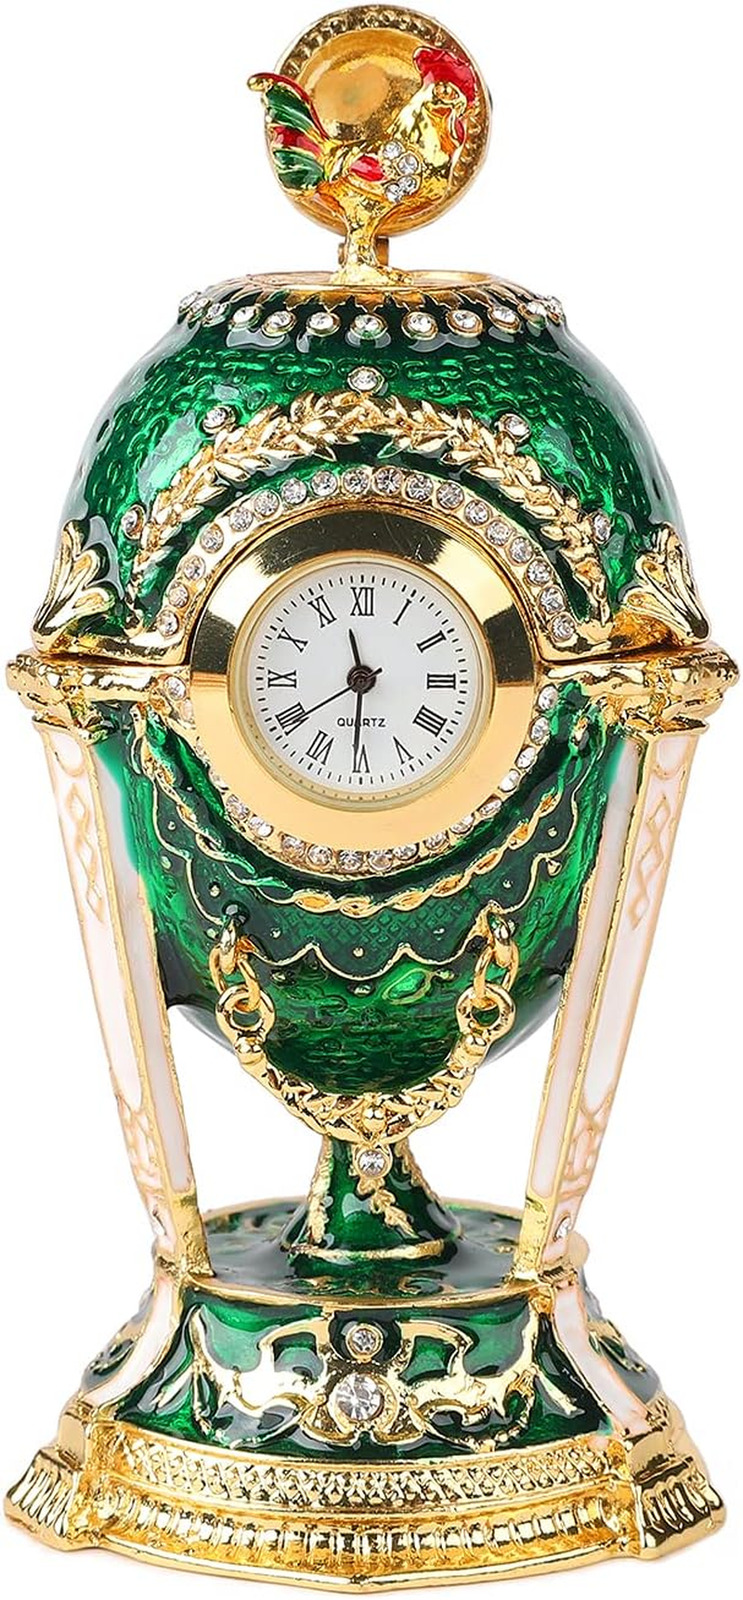 QIFU Greeb Faberge Egg Style Hand Painted Hinged Jewelry Trinket Box, Vintage Ta